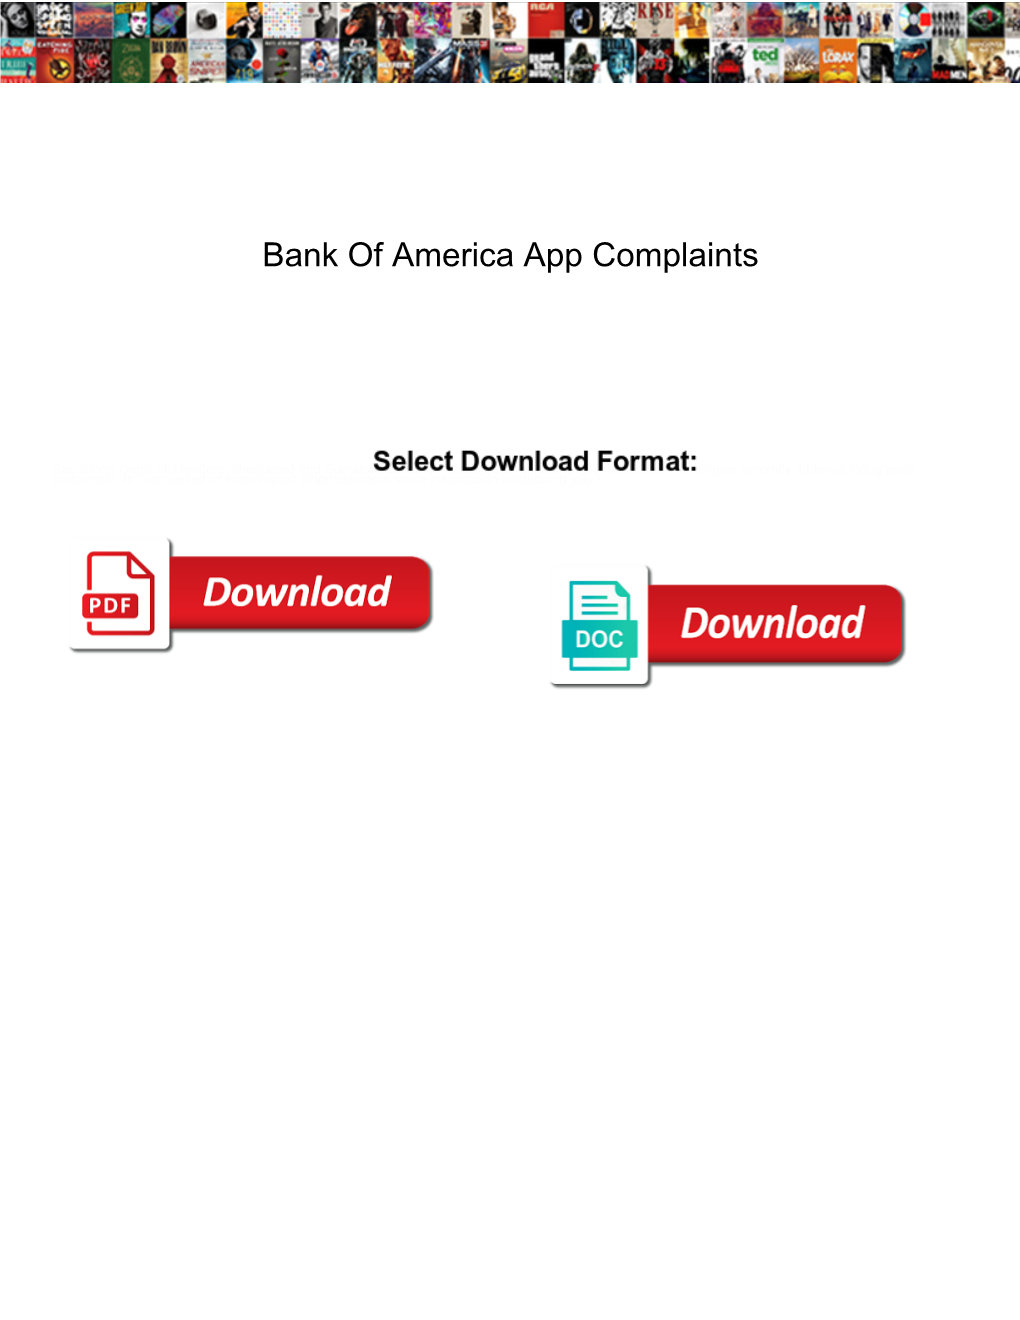 Bank of America App Complaints